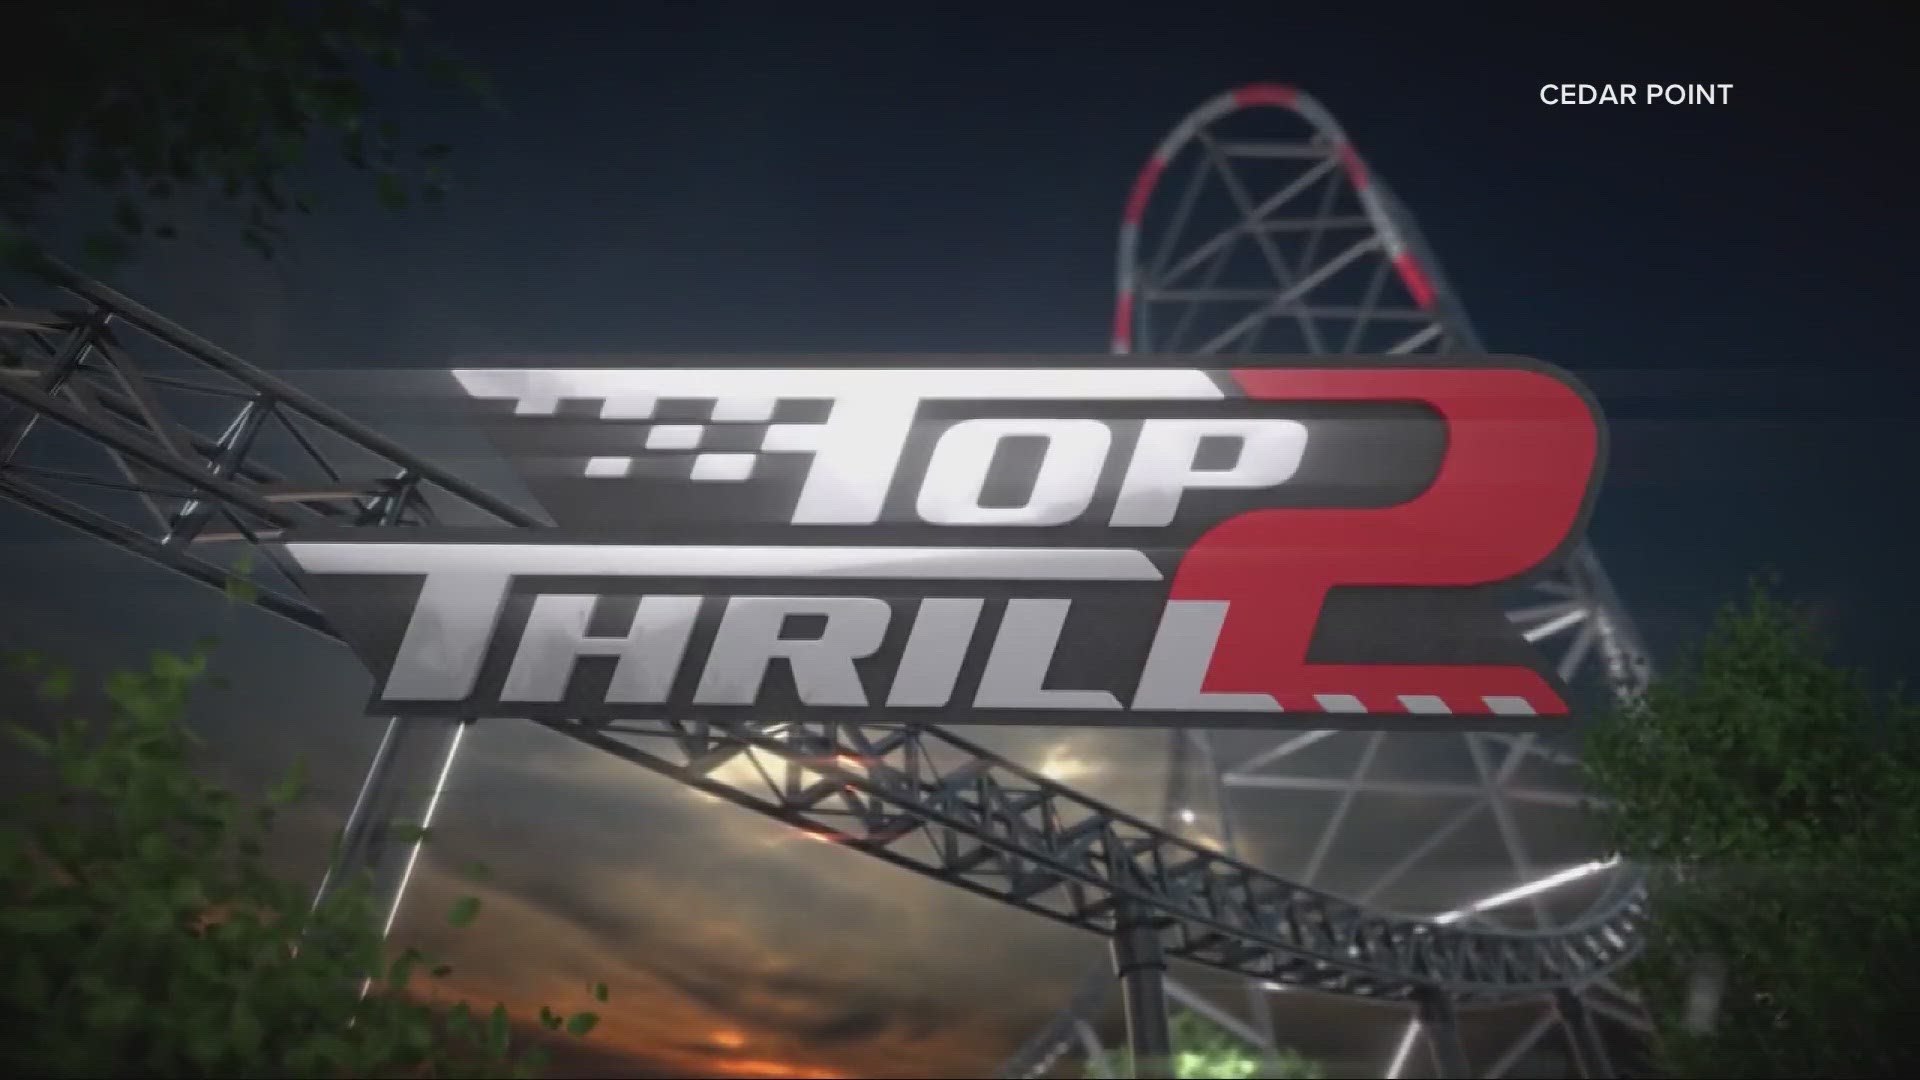 Cedar Point Top Thrill 2 roller coaster construction update